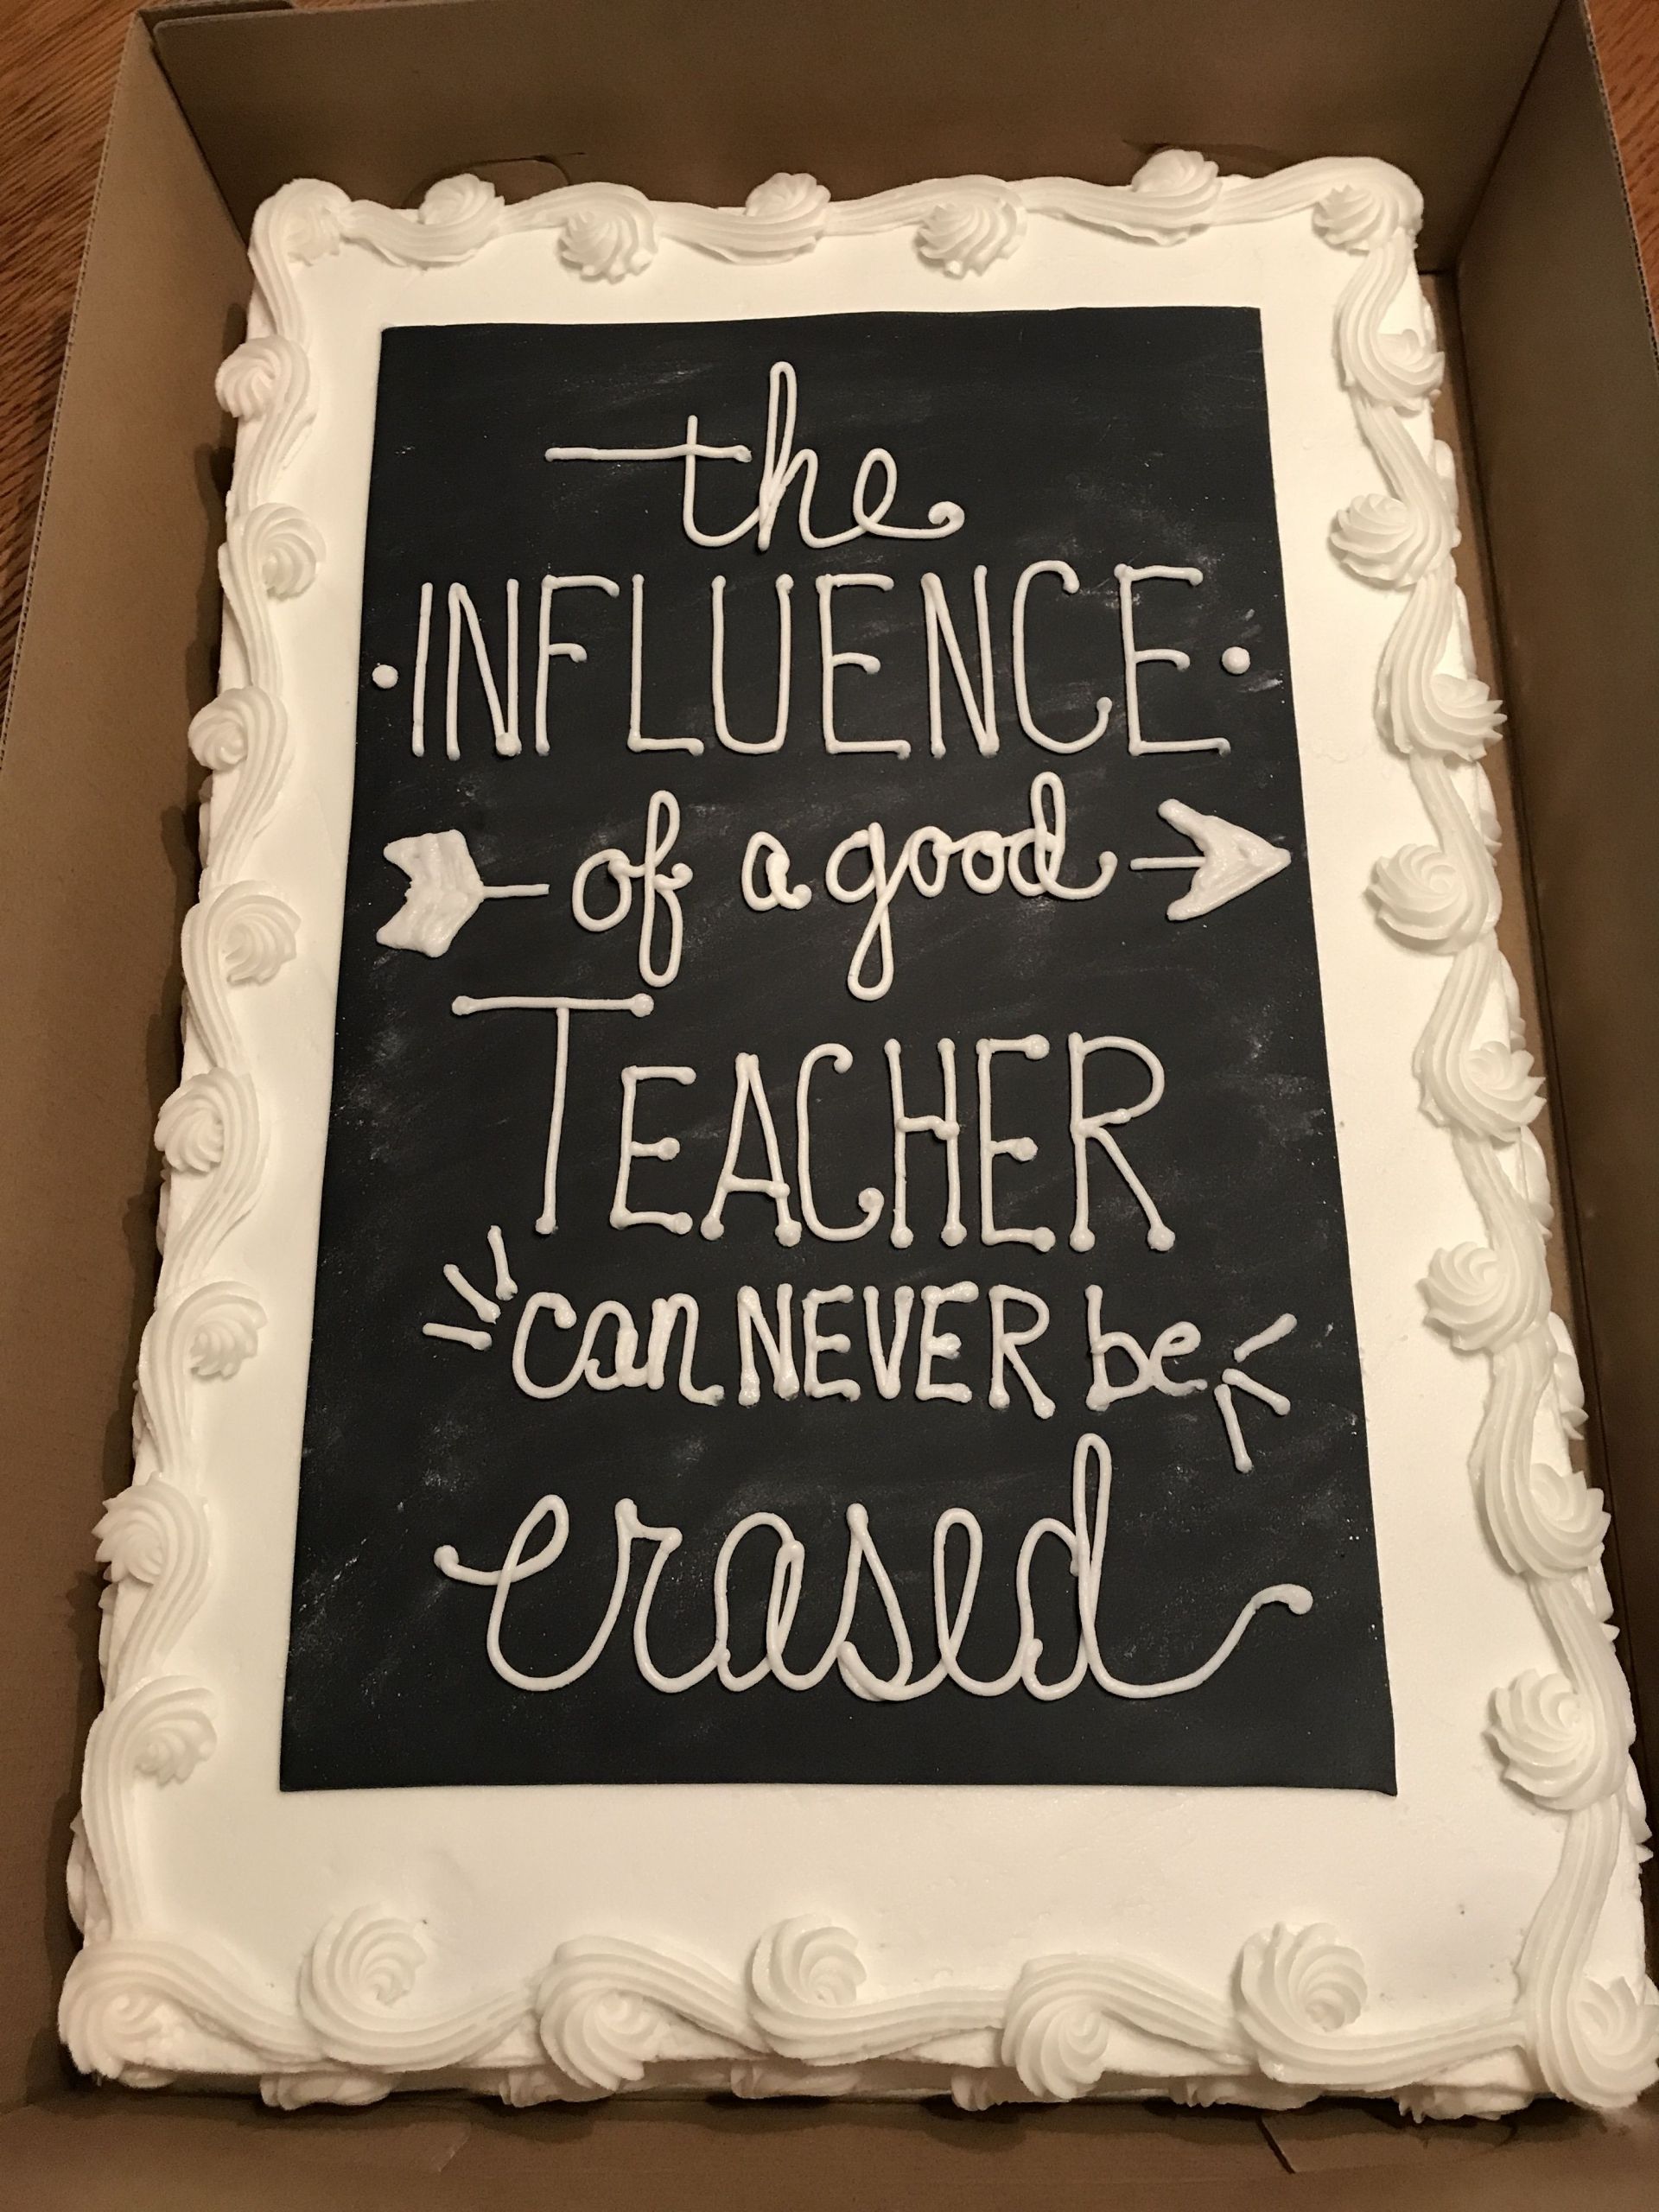 Retirement Party Ideas For Teachers
 Teacher retirement cake